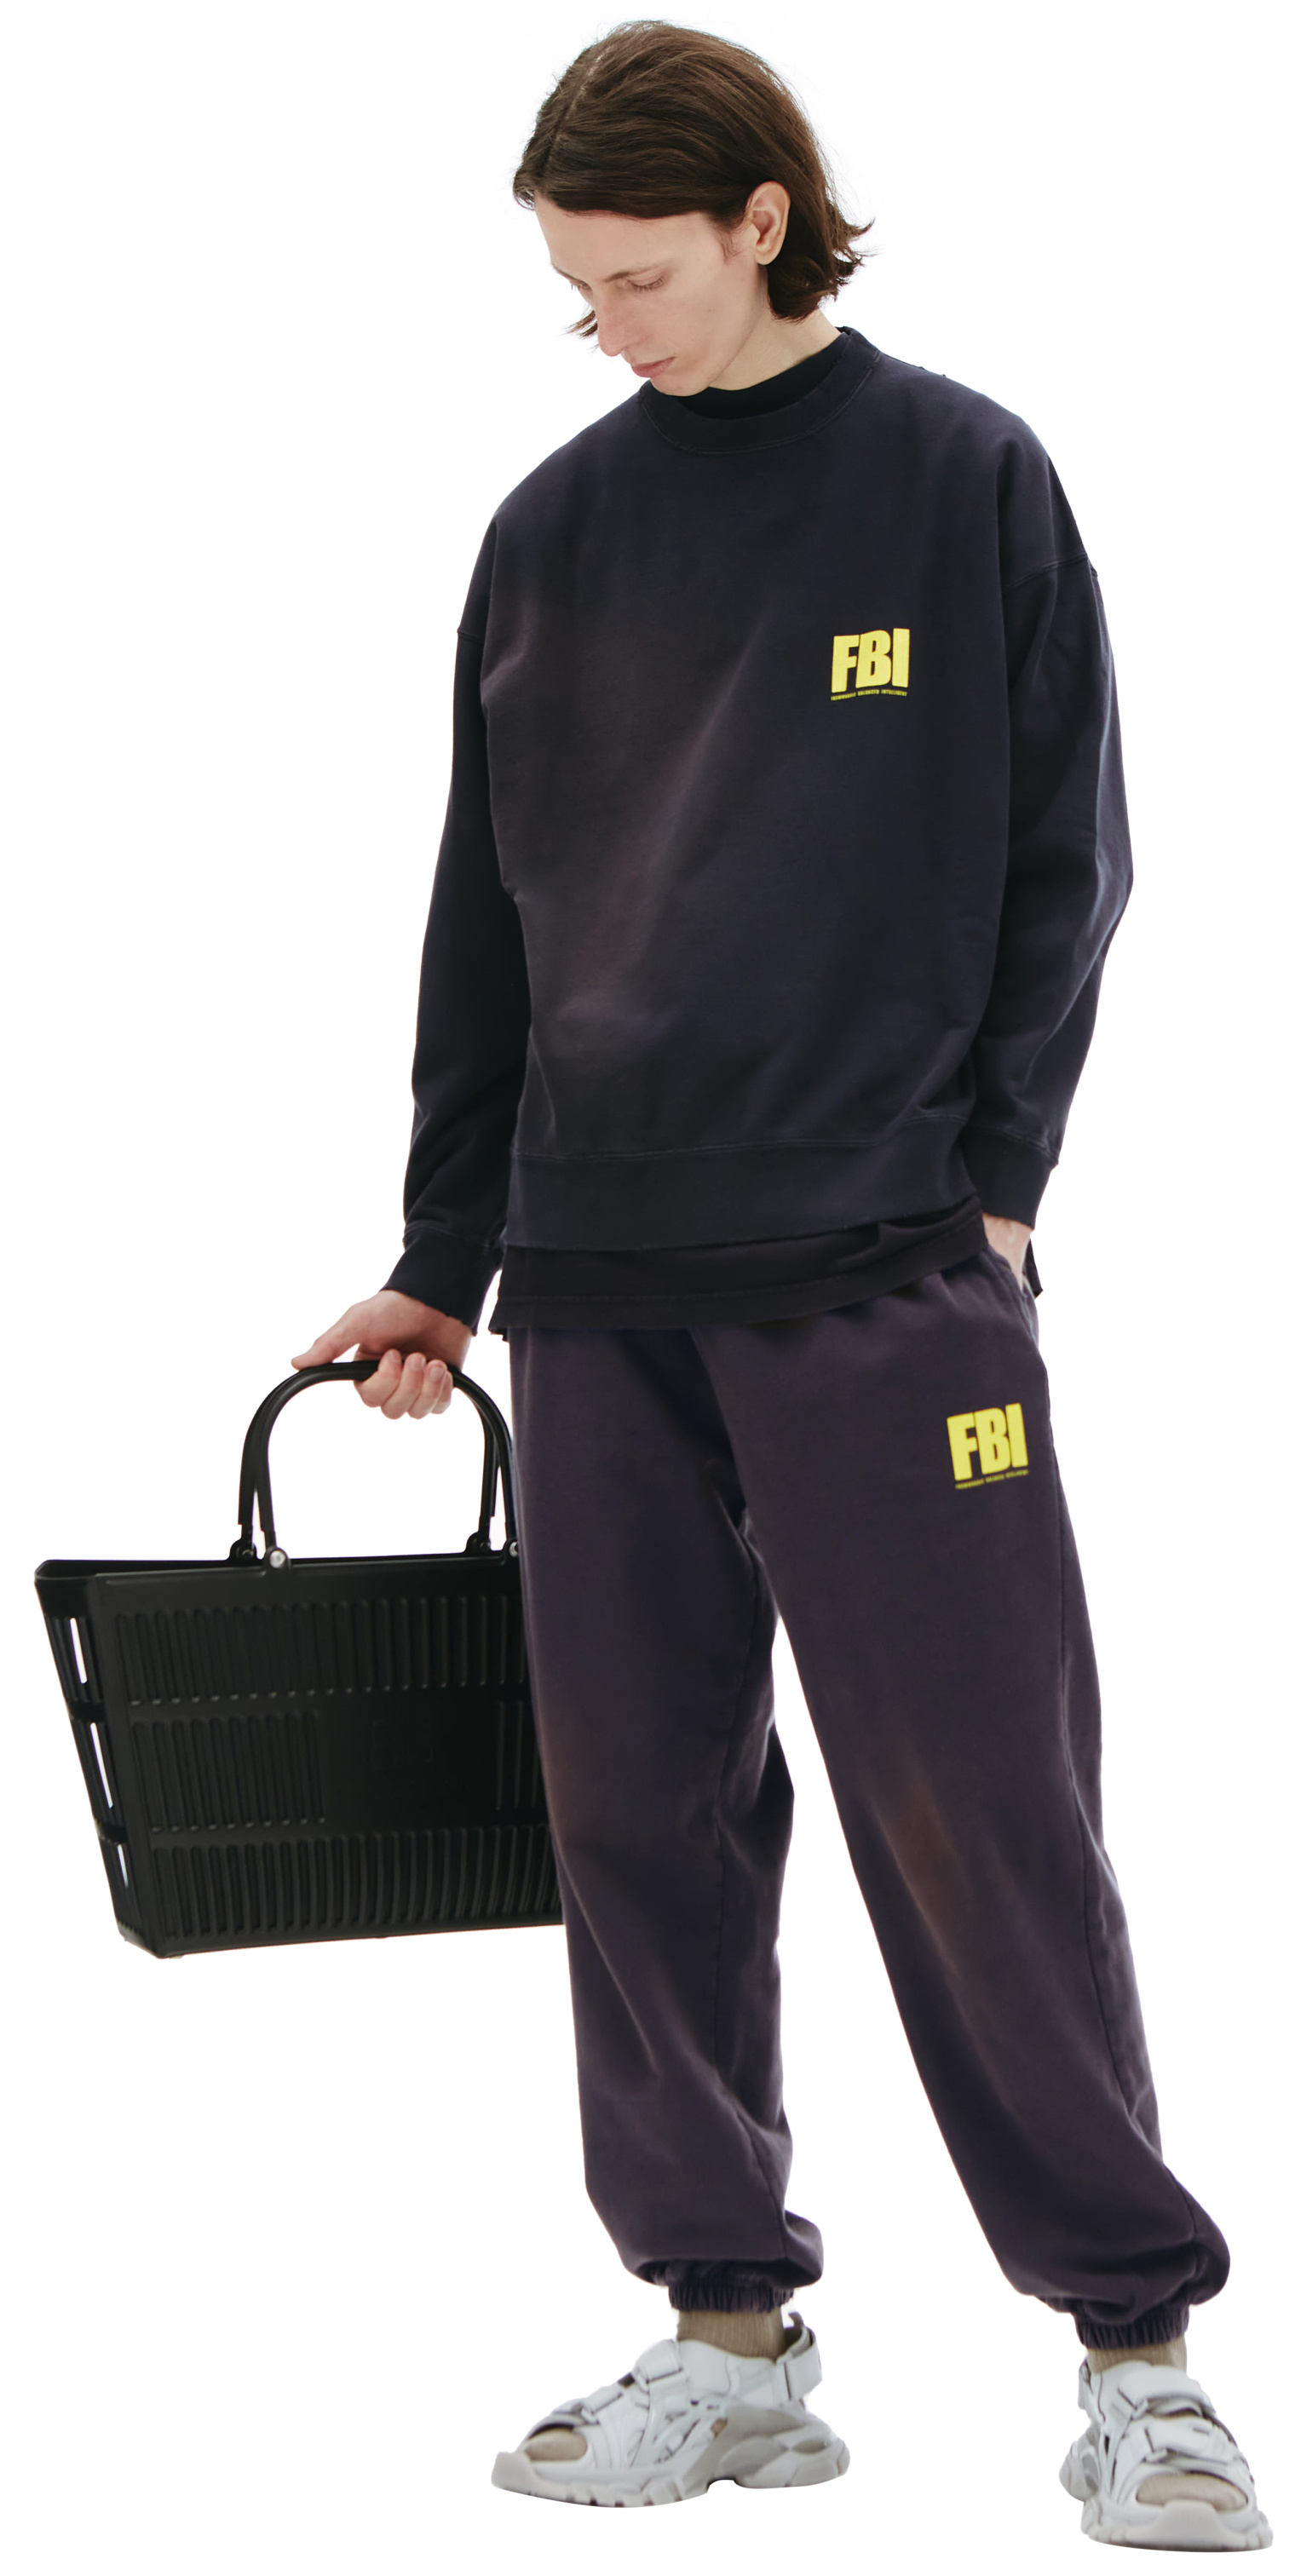 Balenciaga Fraying sweatshirt with FBI print